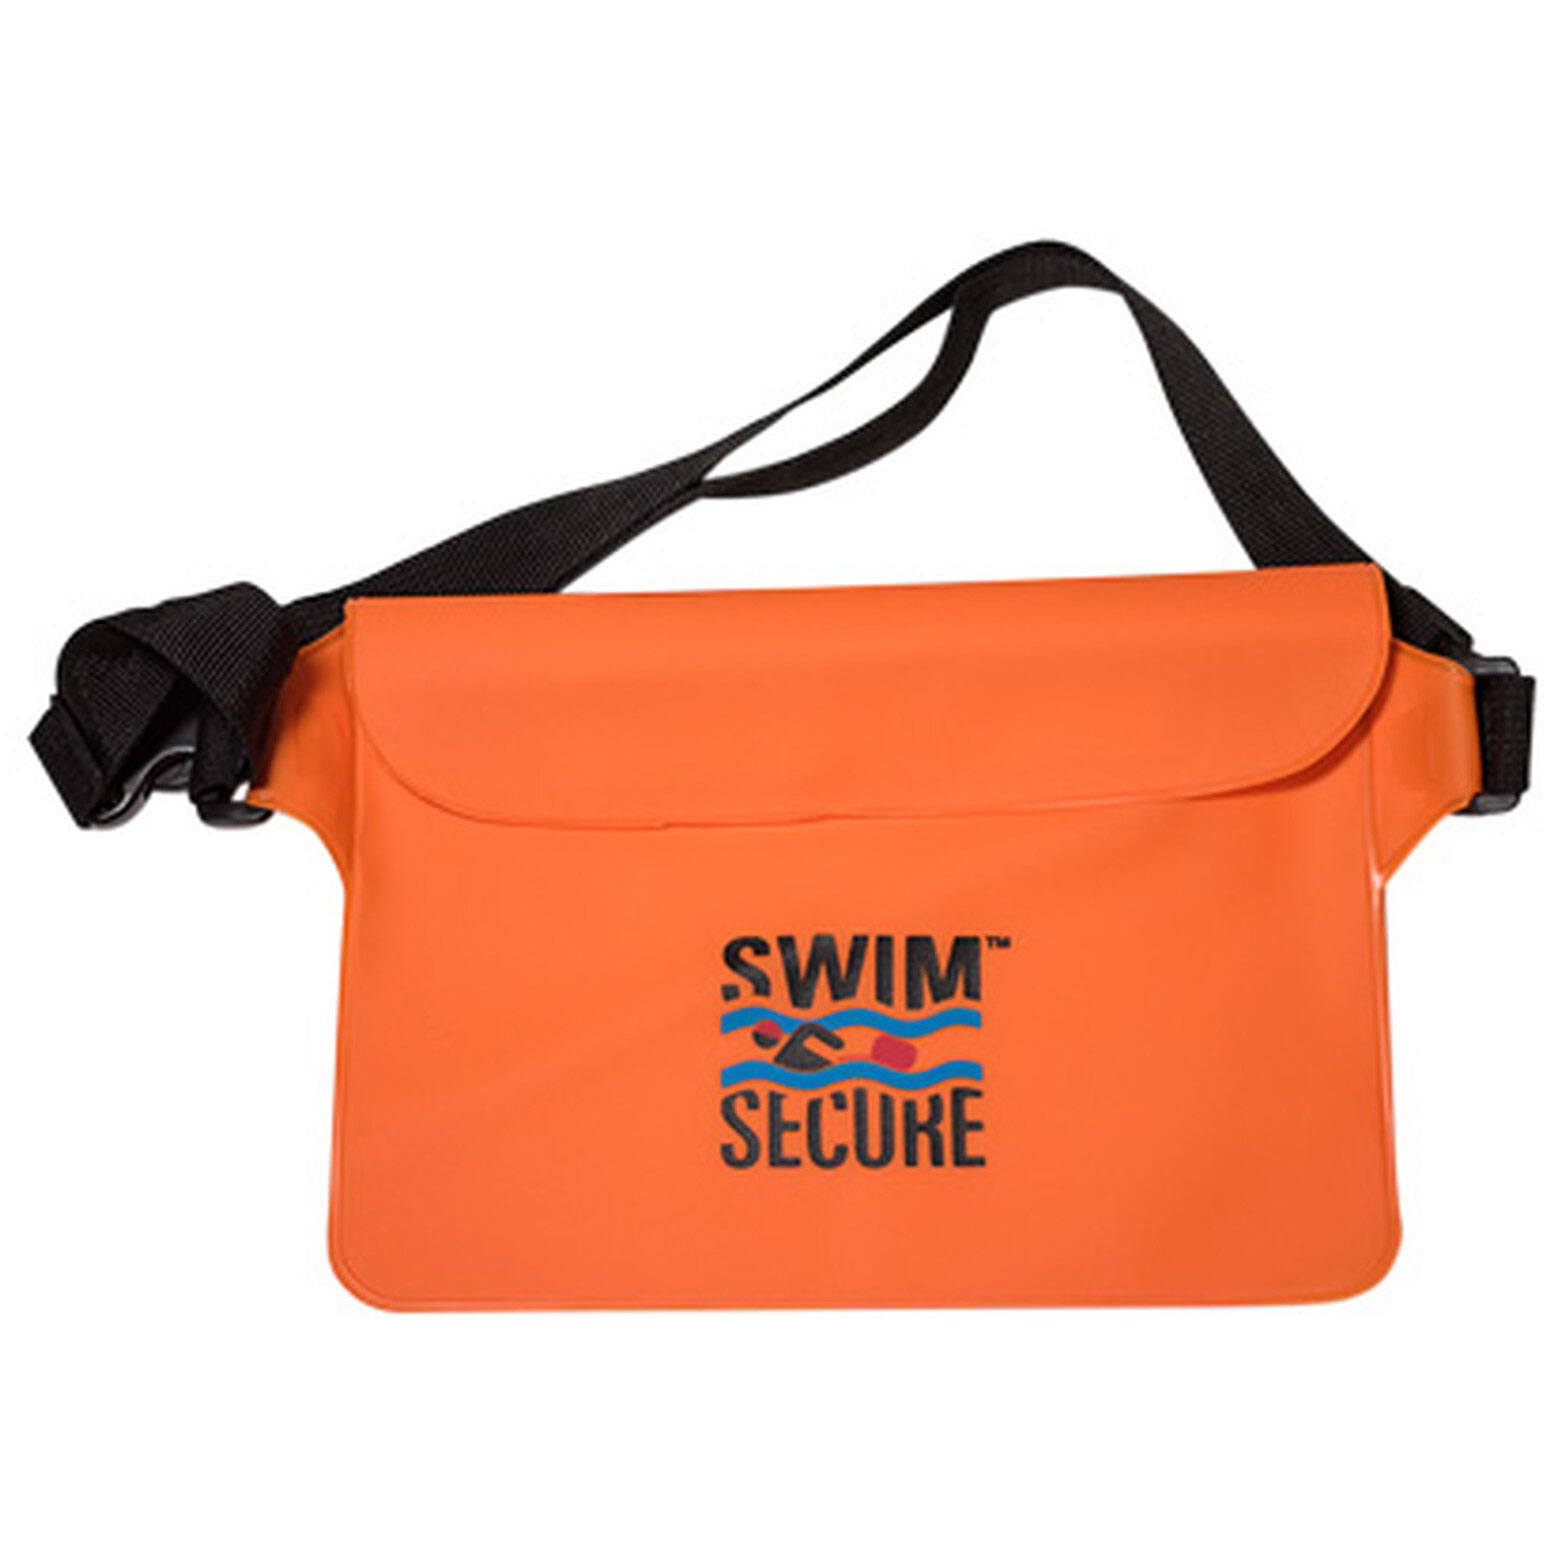 waterproof travel bum bag